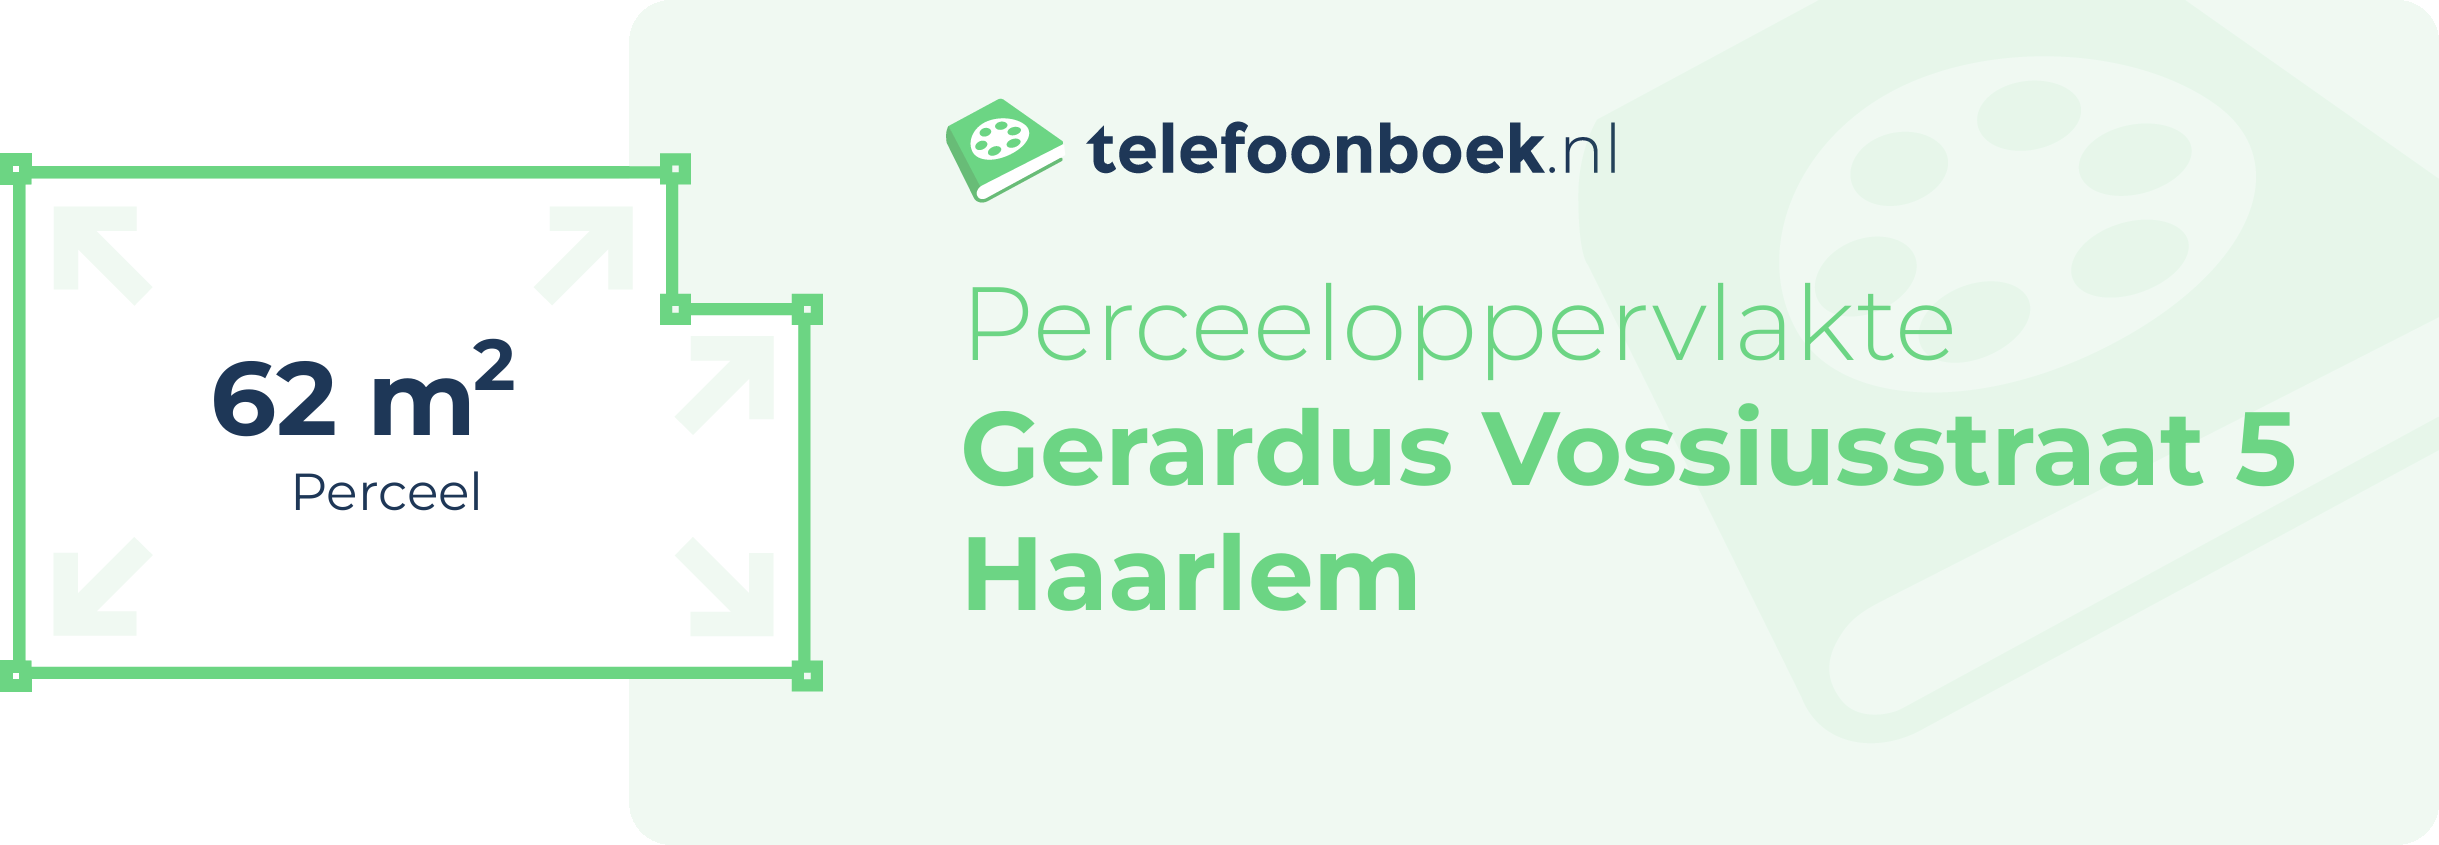 Perceeloppervlakte Gerardus Vossiusstraat 5 Haarlem